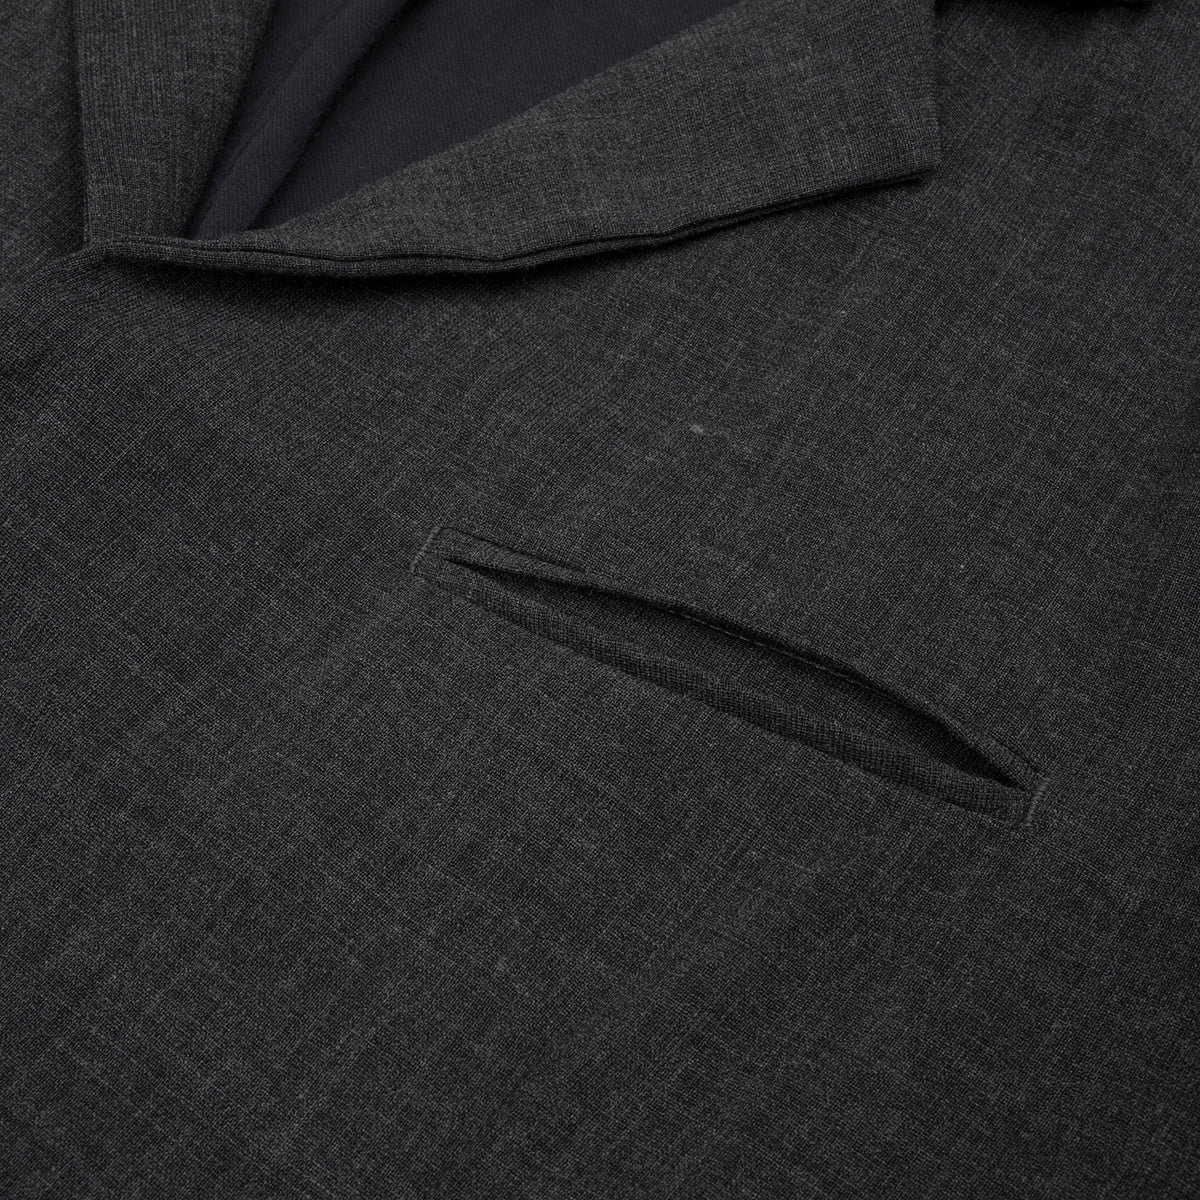 Nilmance | Suit Jacket SJ-03 Dark Grey - Concrete